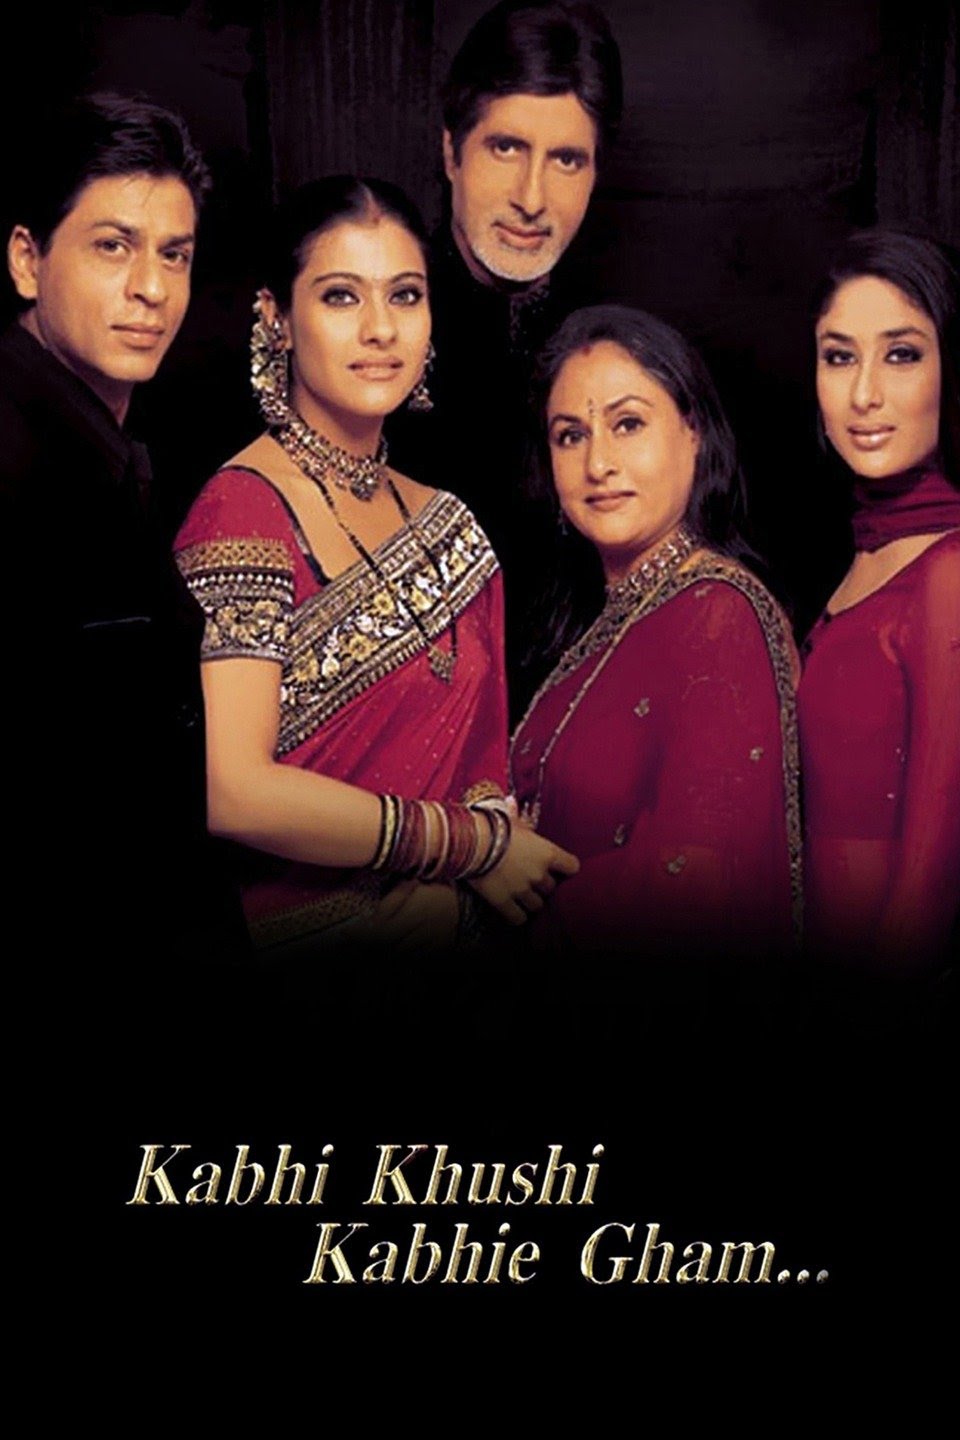 Film poster for Kabhi Khushi Kabhie Gham…